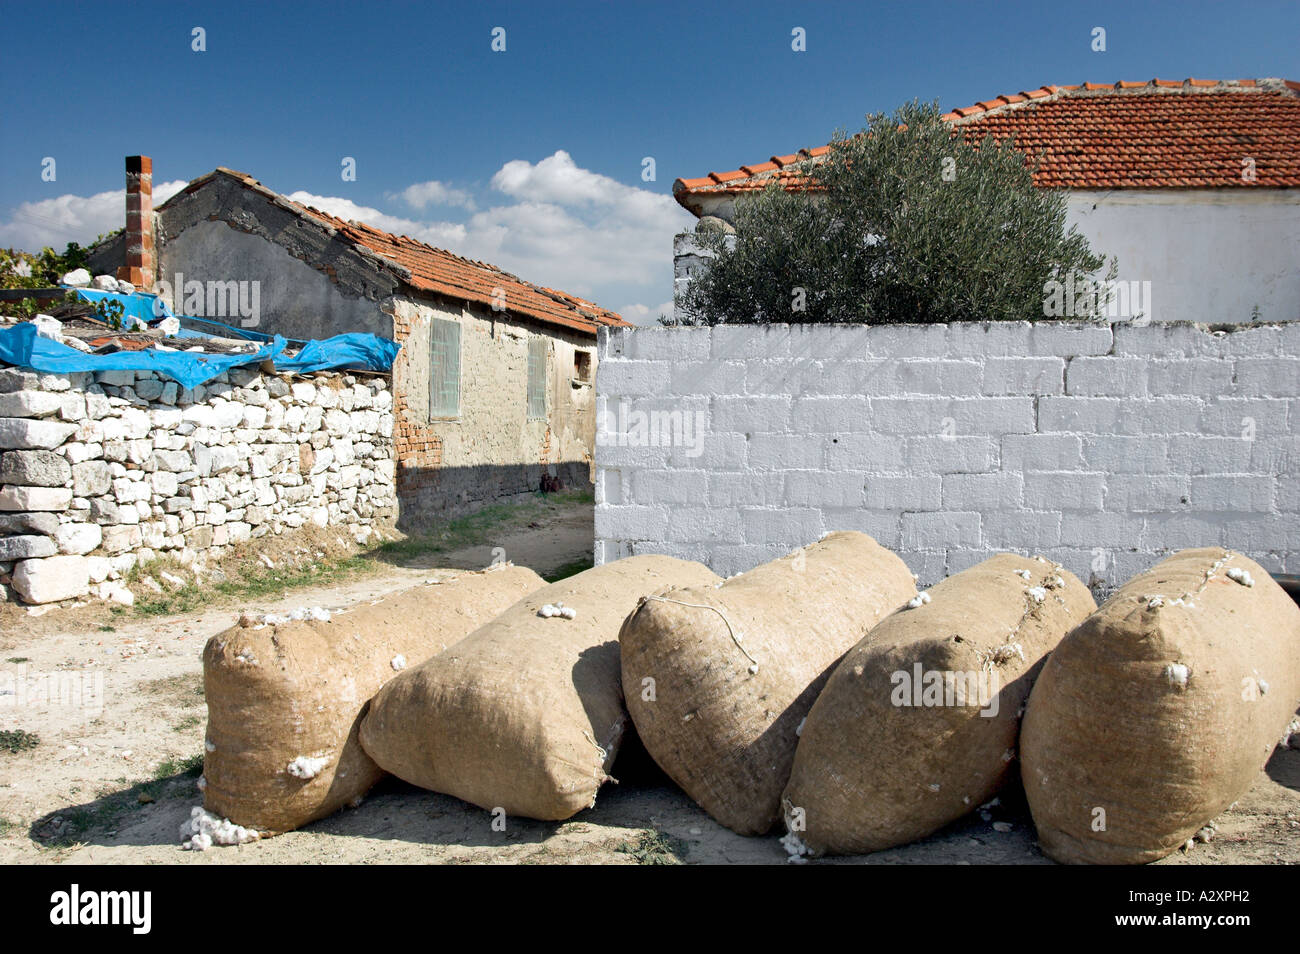 Sacks of cotton in Turkish village near Miletus. Stock Photo